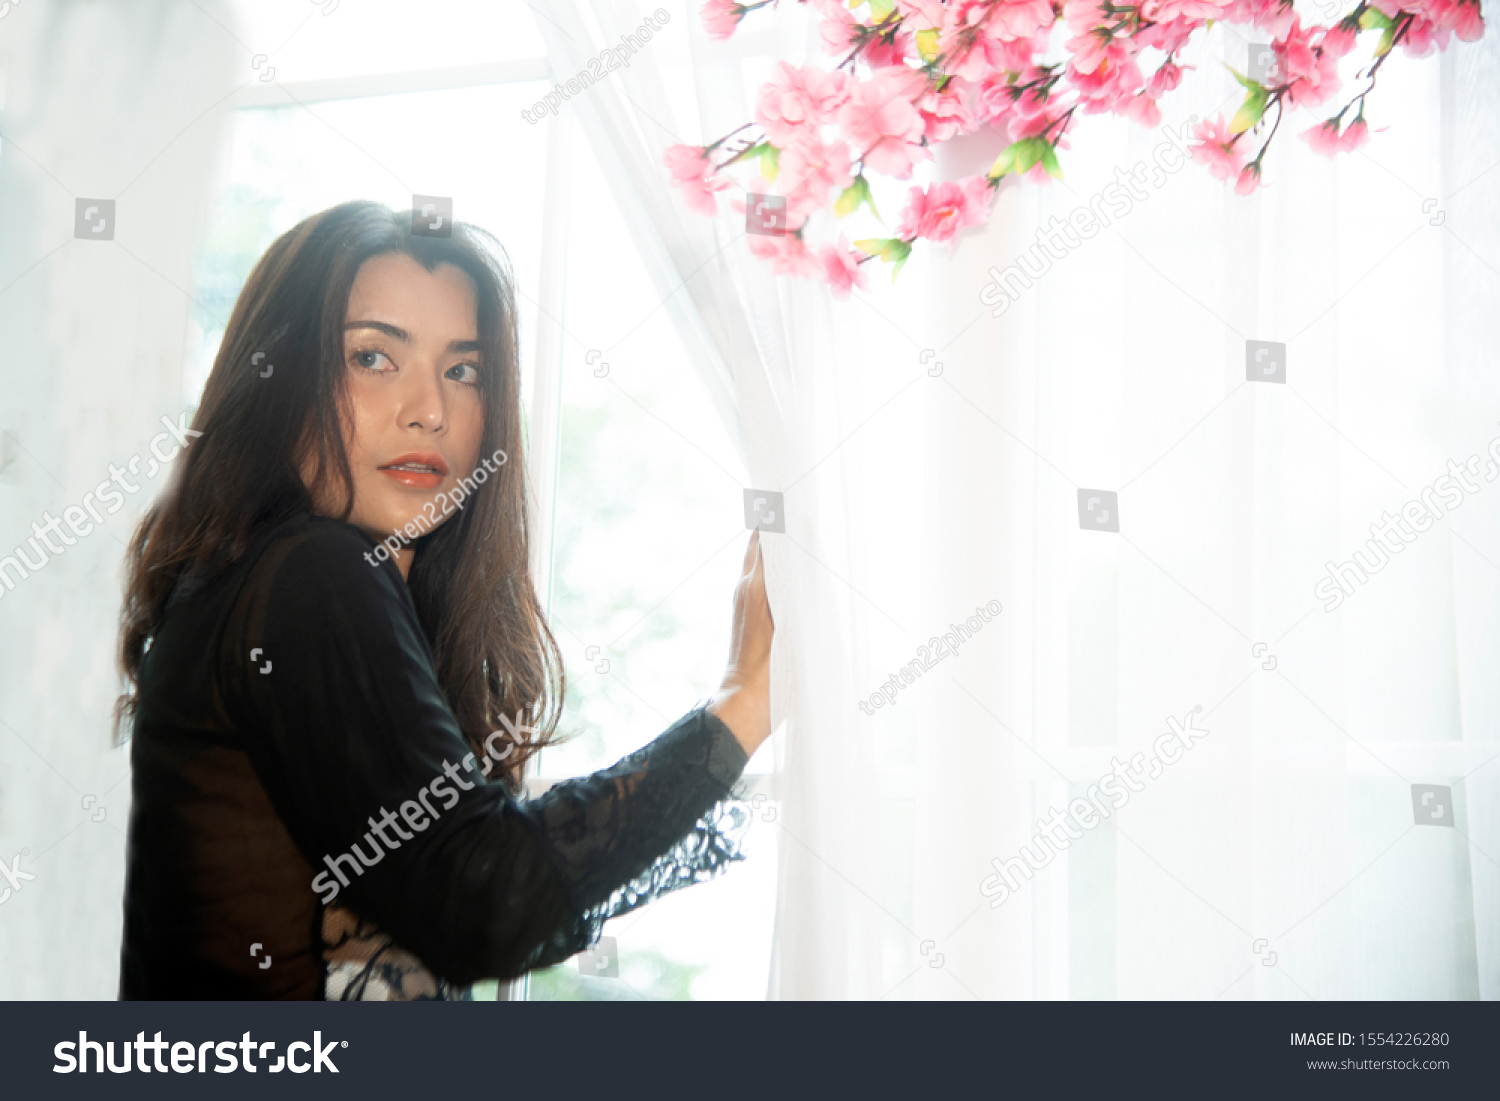 Sensual sexy dresses Asian women sensuality standing under pink flower tree near window.   #1554226280